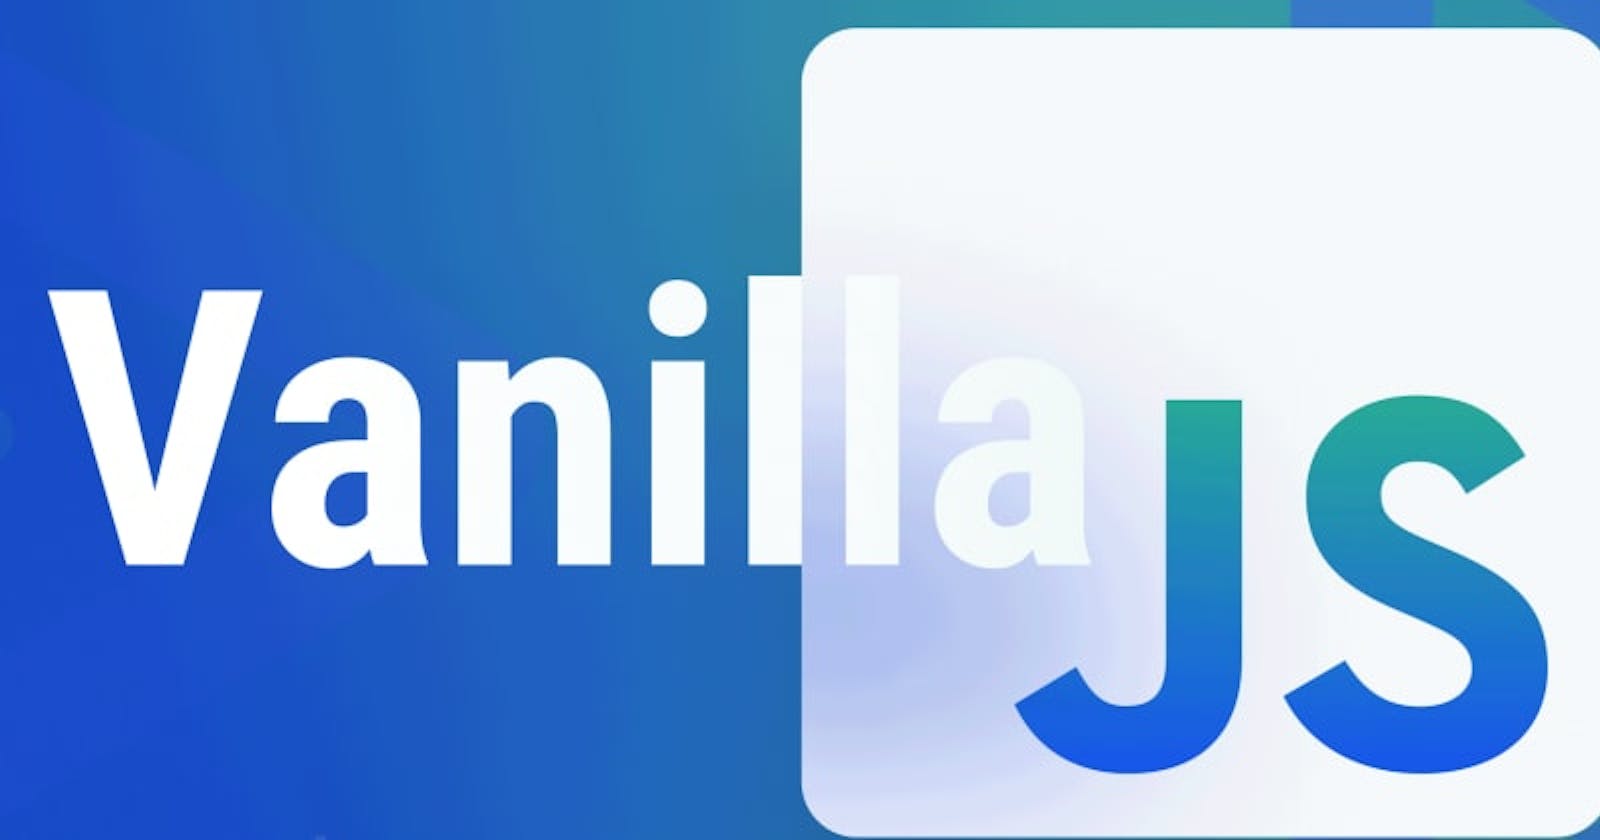 Recognizing Speech with vanilla JavaScript